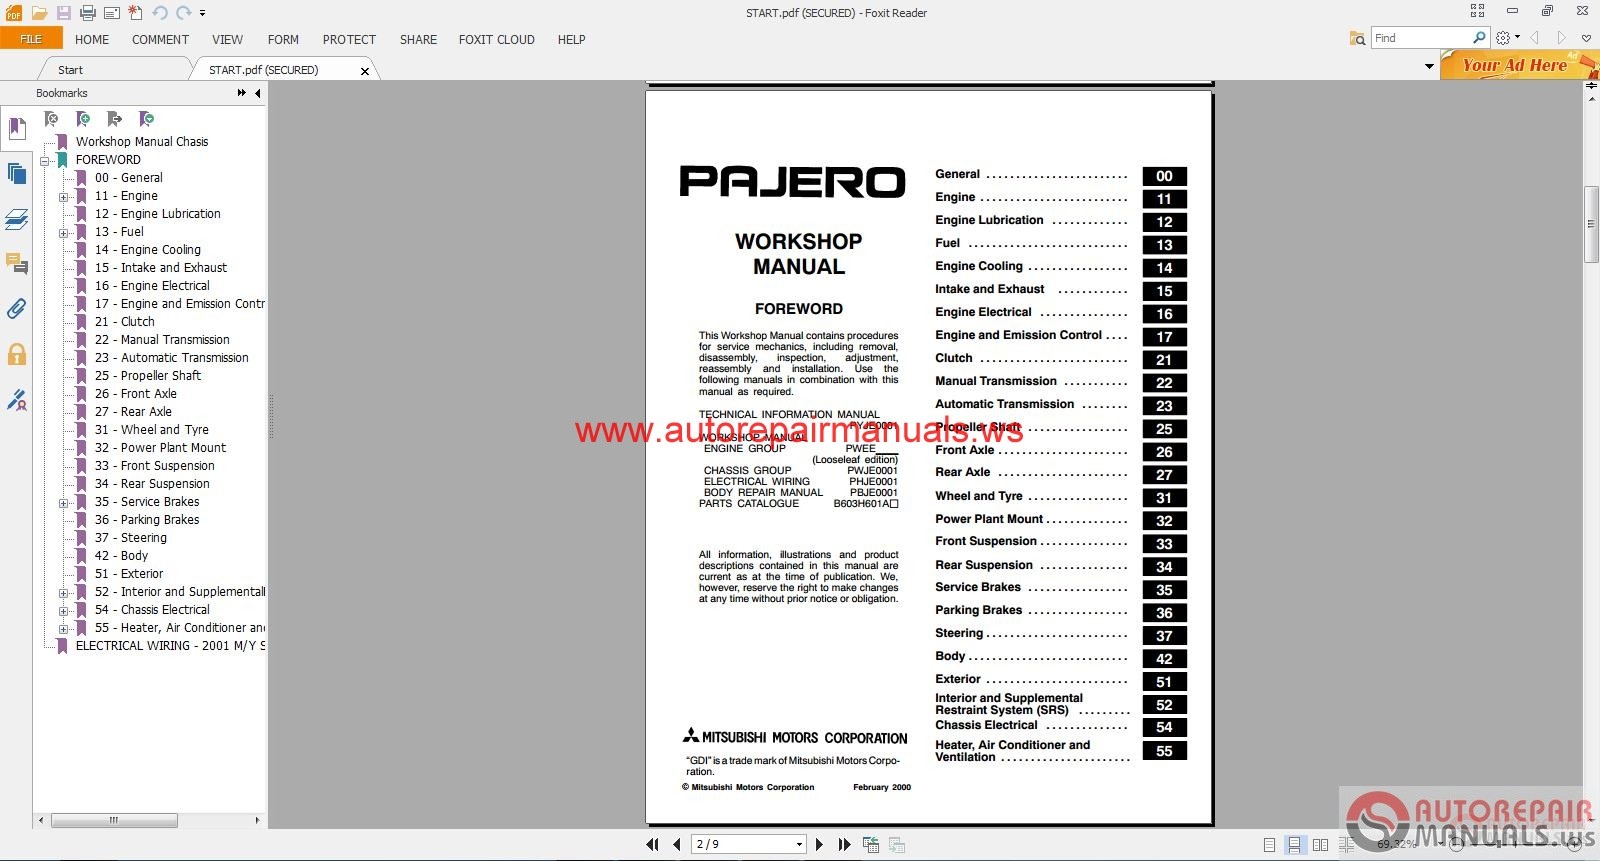 2015 pajero service manual